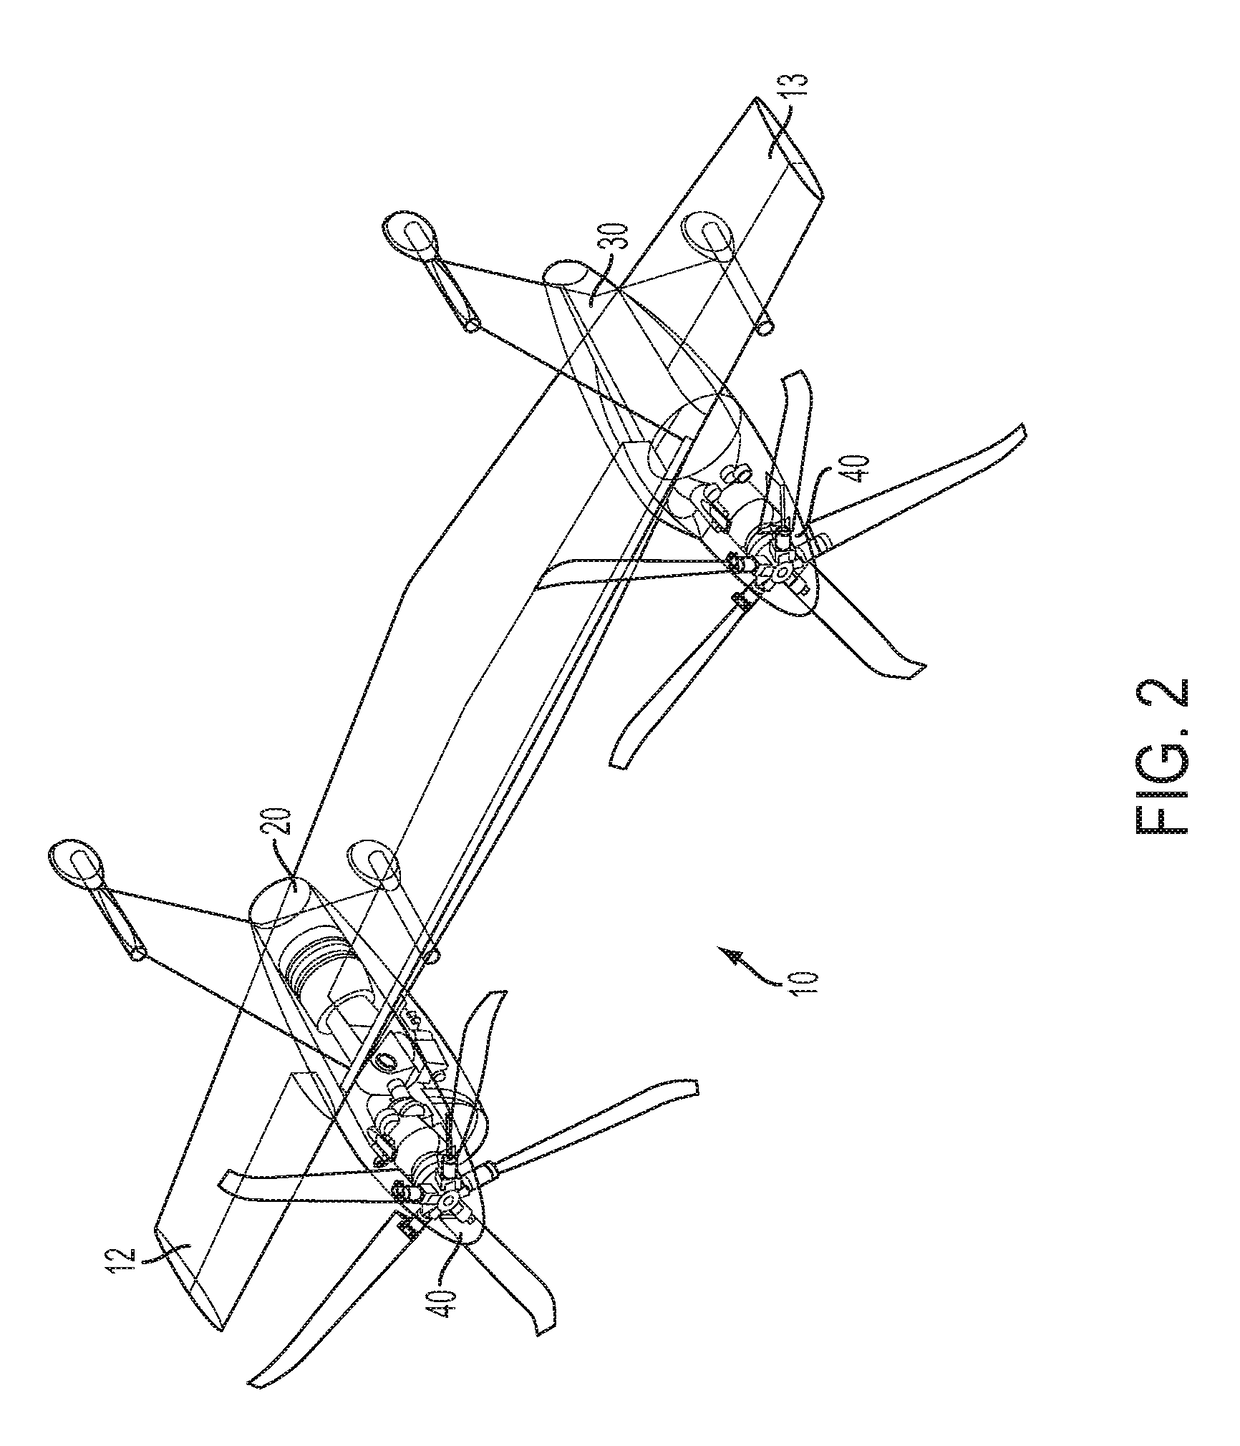 Single engine, asymmetrical vertical take-off and landing (VTOL) aircraft